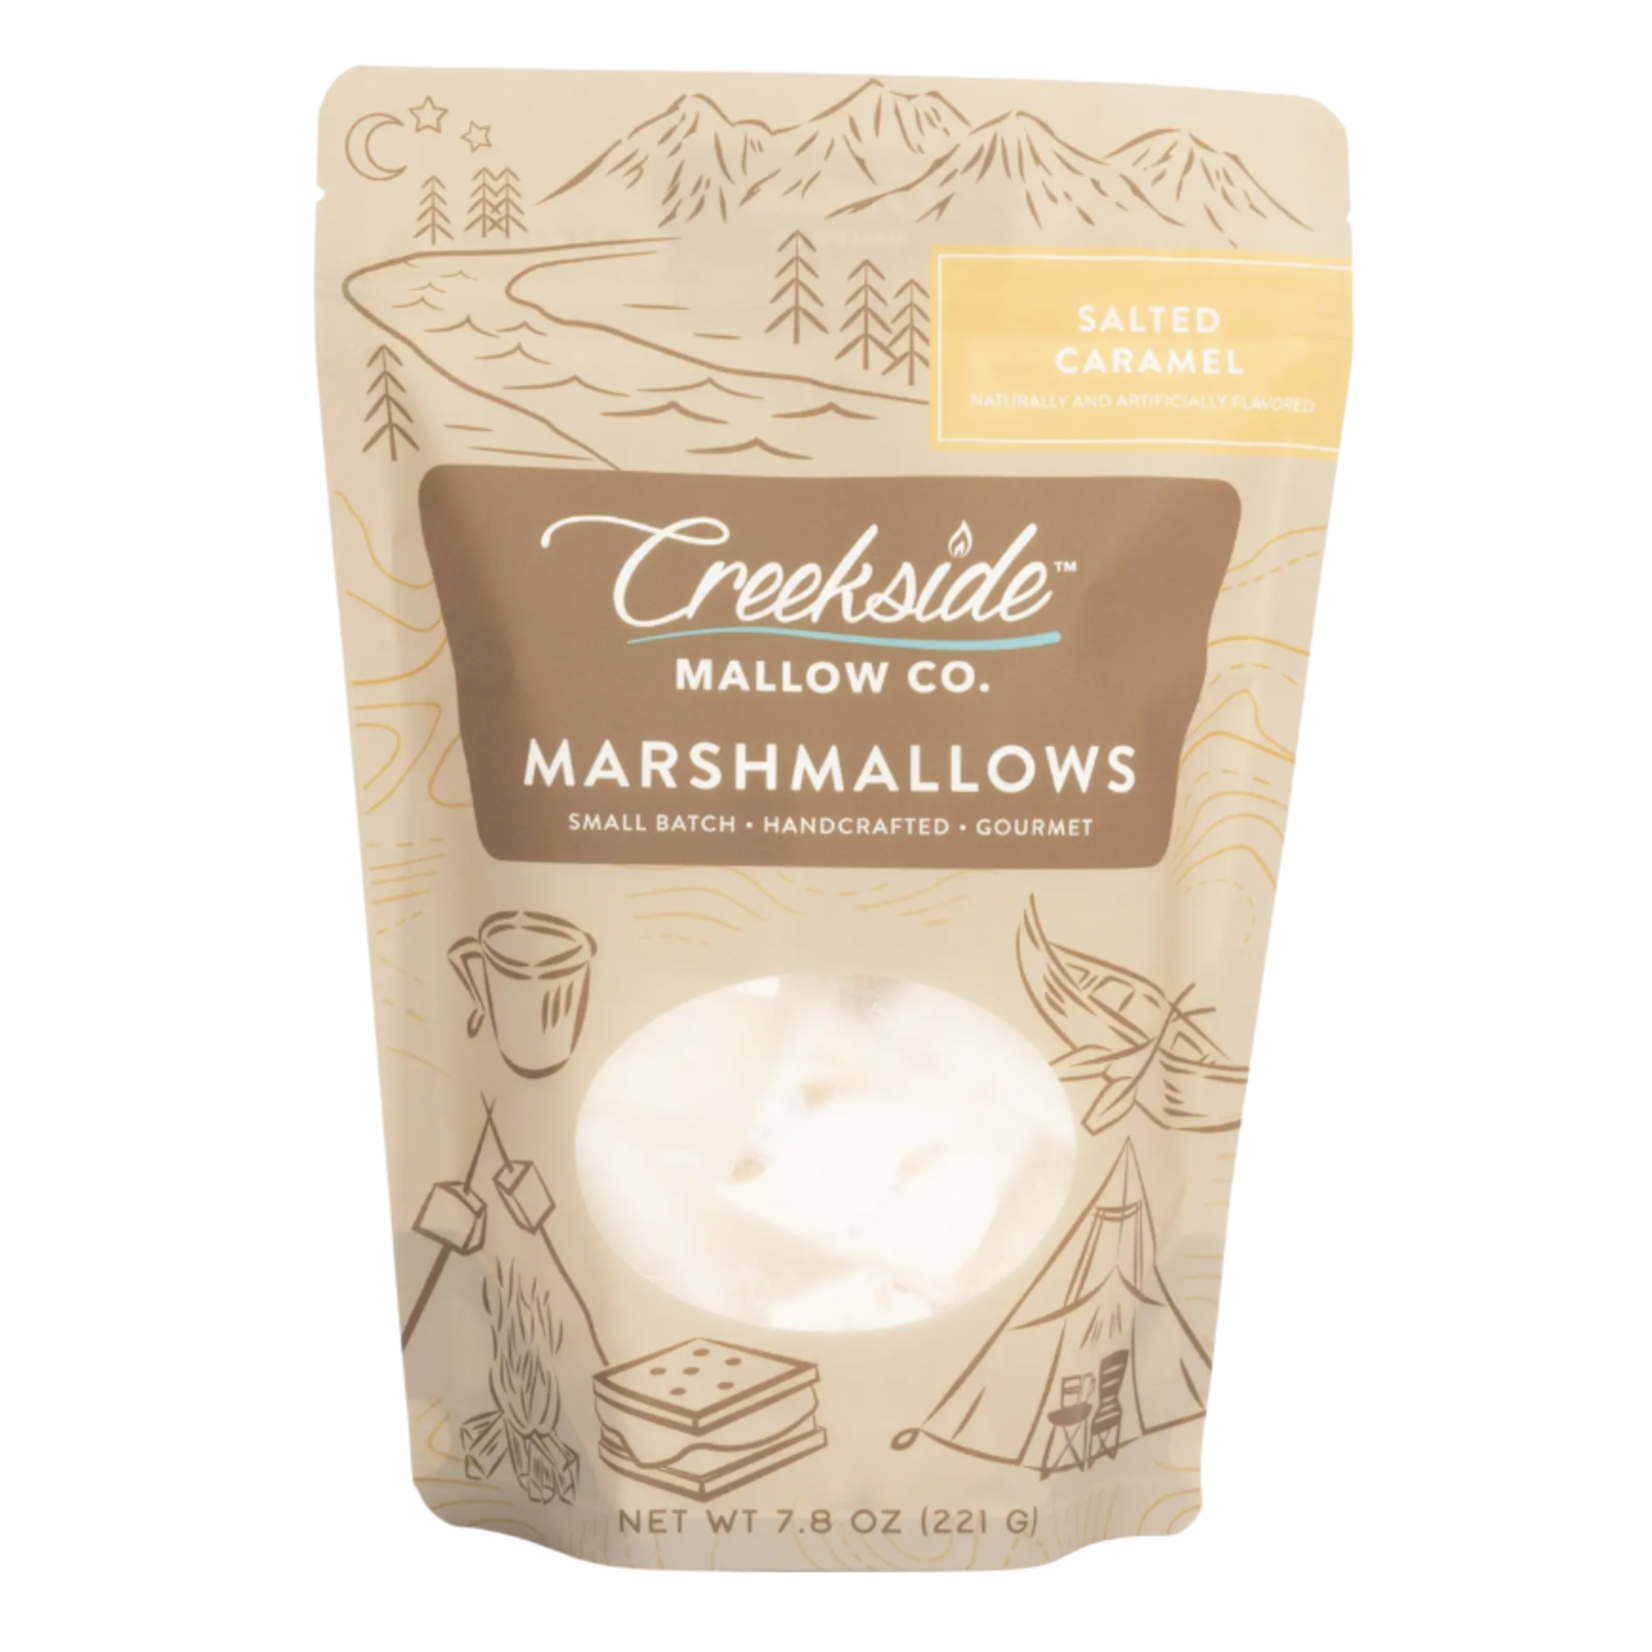 Creekside Mallow Co. / Fireside Mallow Co. Salted Caramel Marshmallow Bag